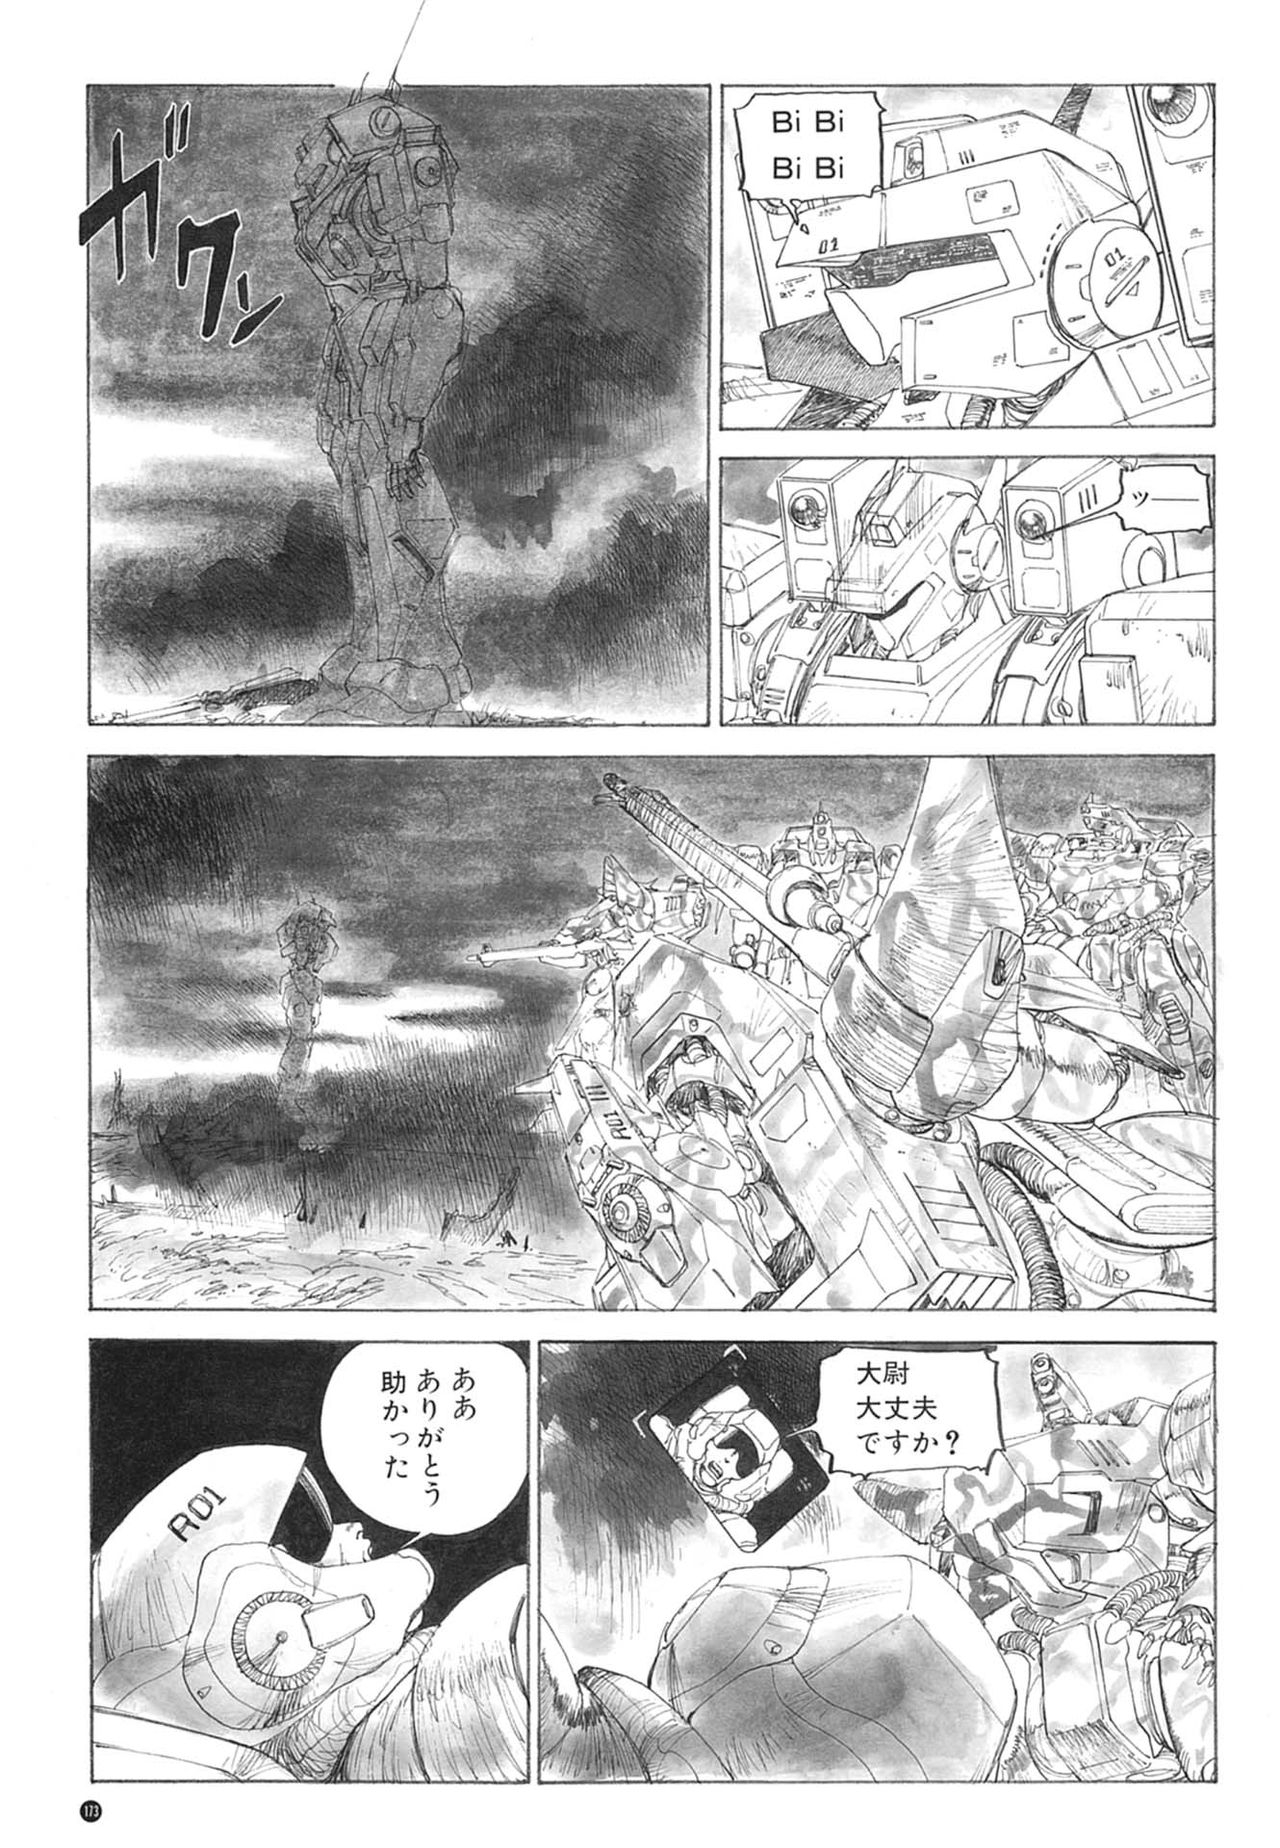 [Kazuhisa Kondo] Kazuhisa Kondo 2D & 3D Works - Go Ahead - From Mobile Suit Gundam to Original Mechanism 172